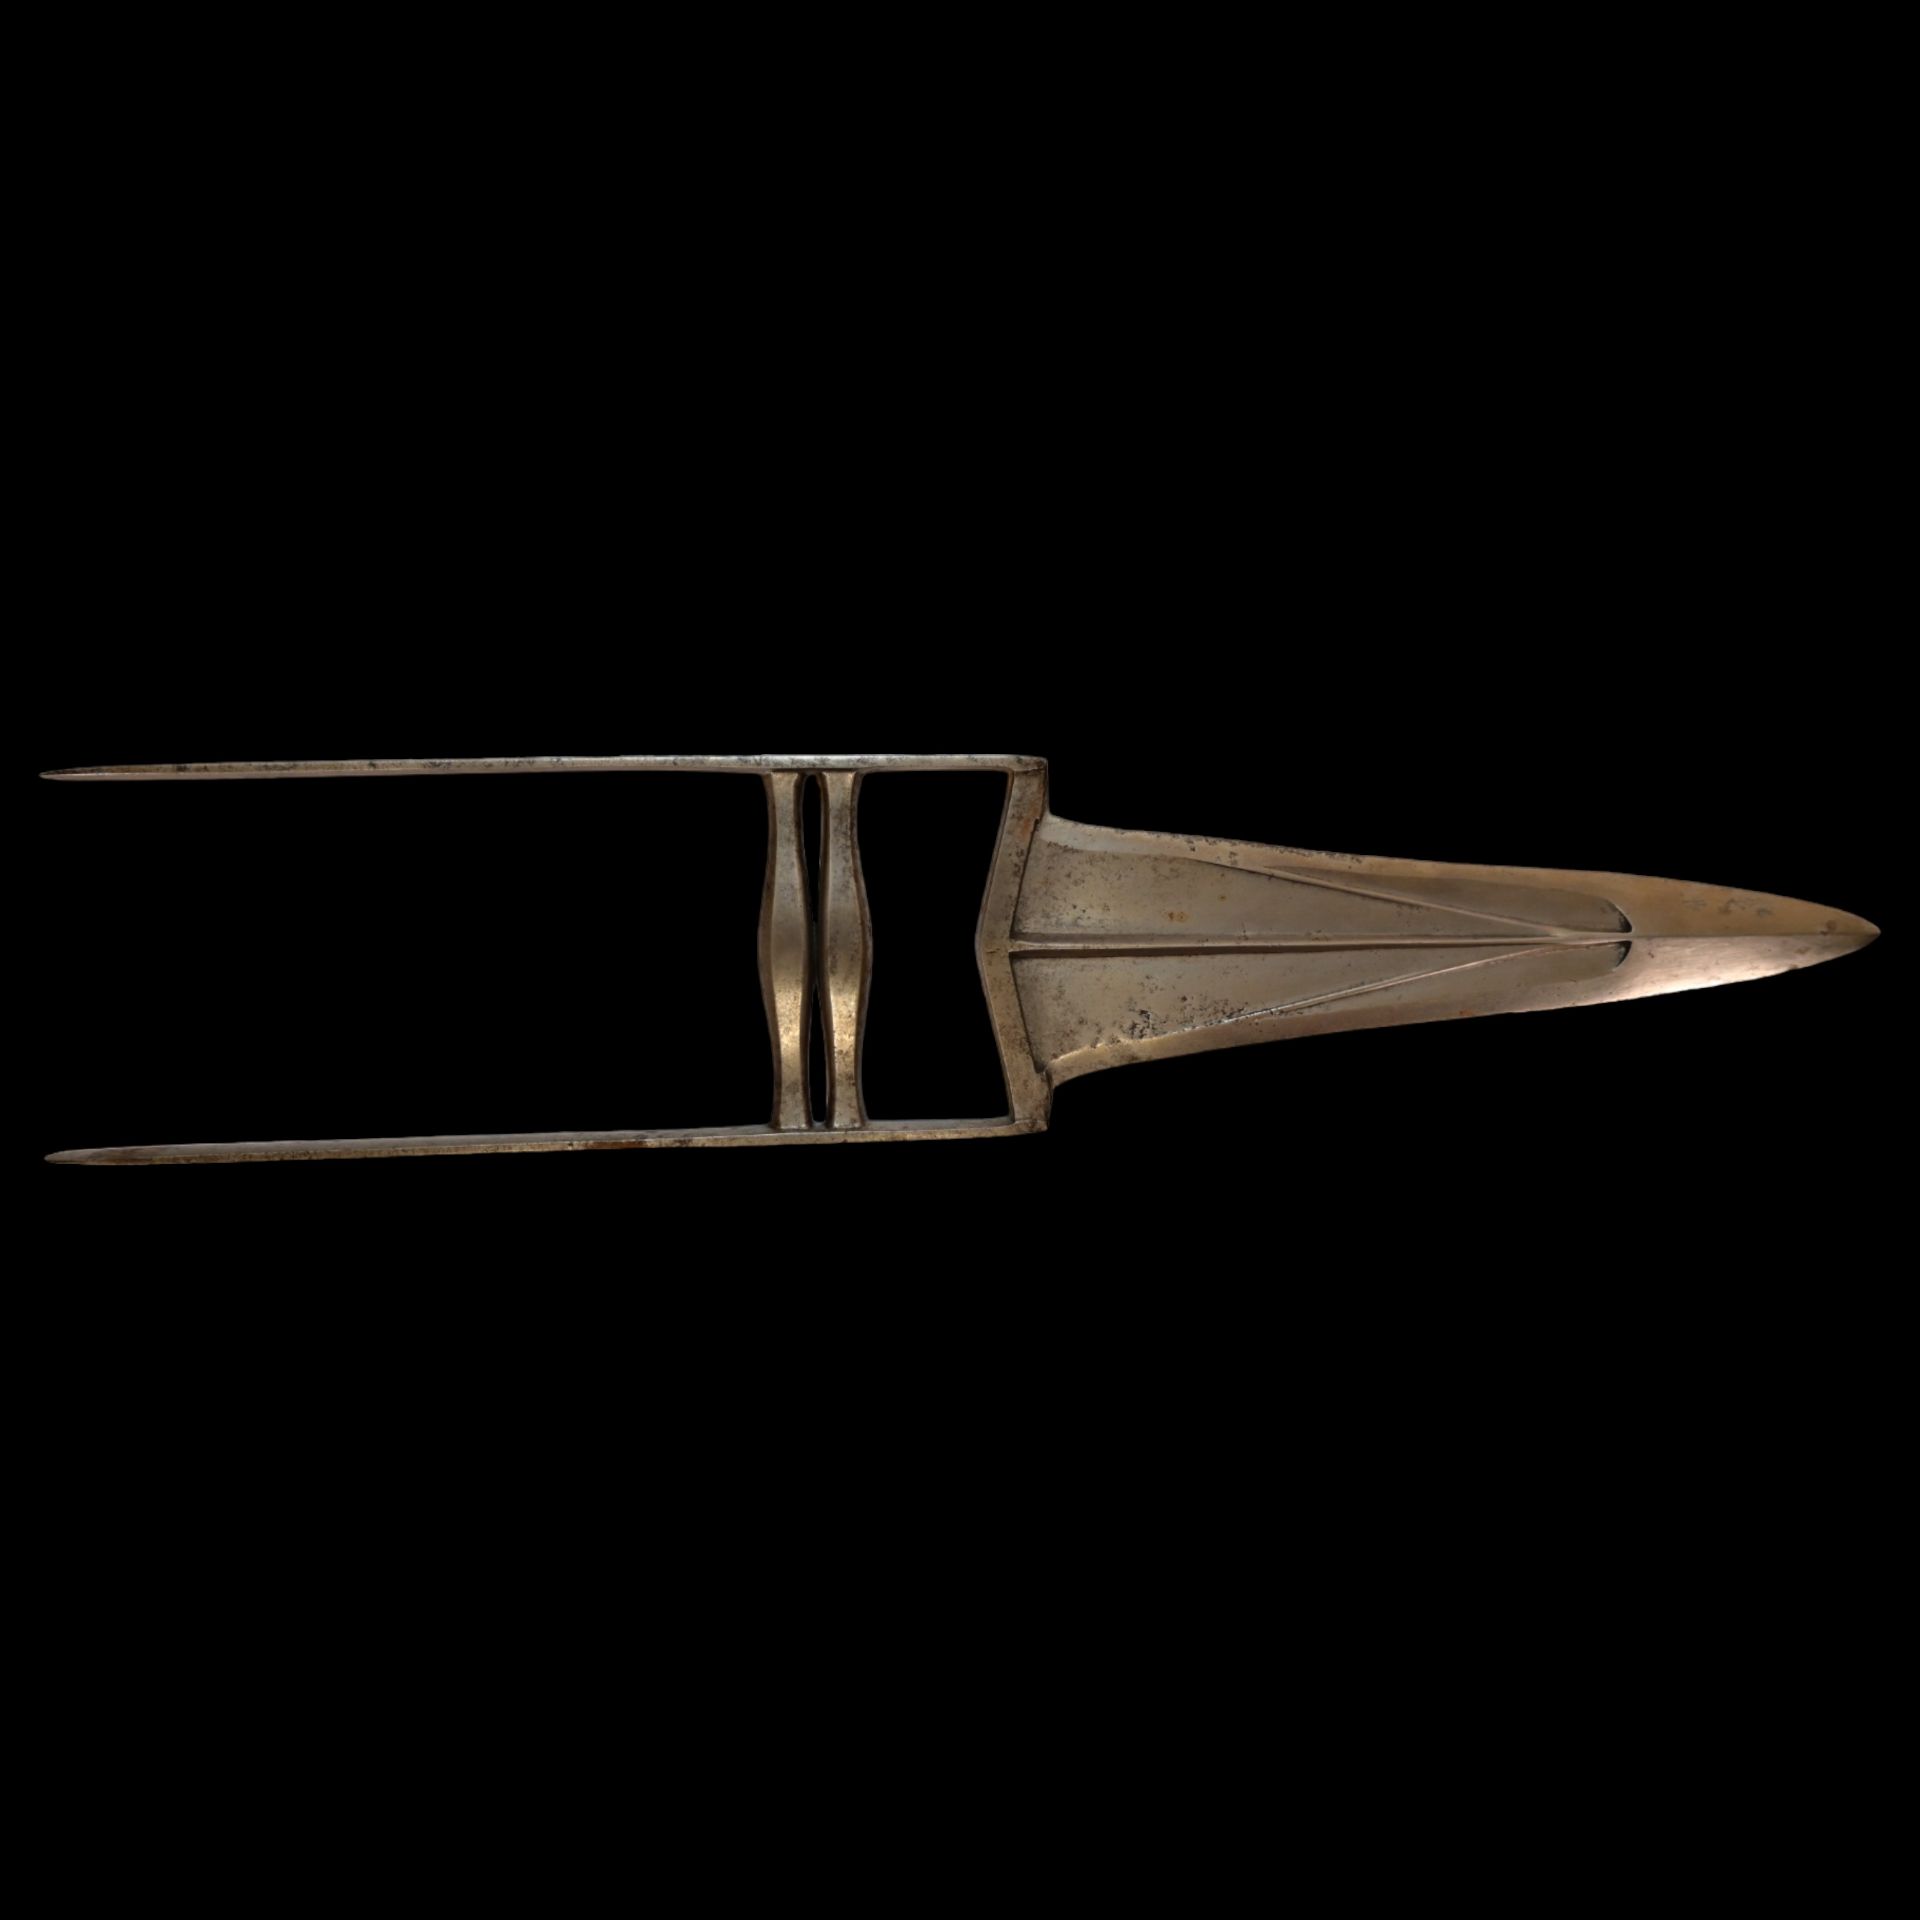 Authentic Indian Katar dagger, 19 century - Image 8 of 9